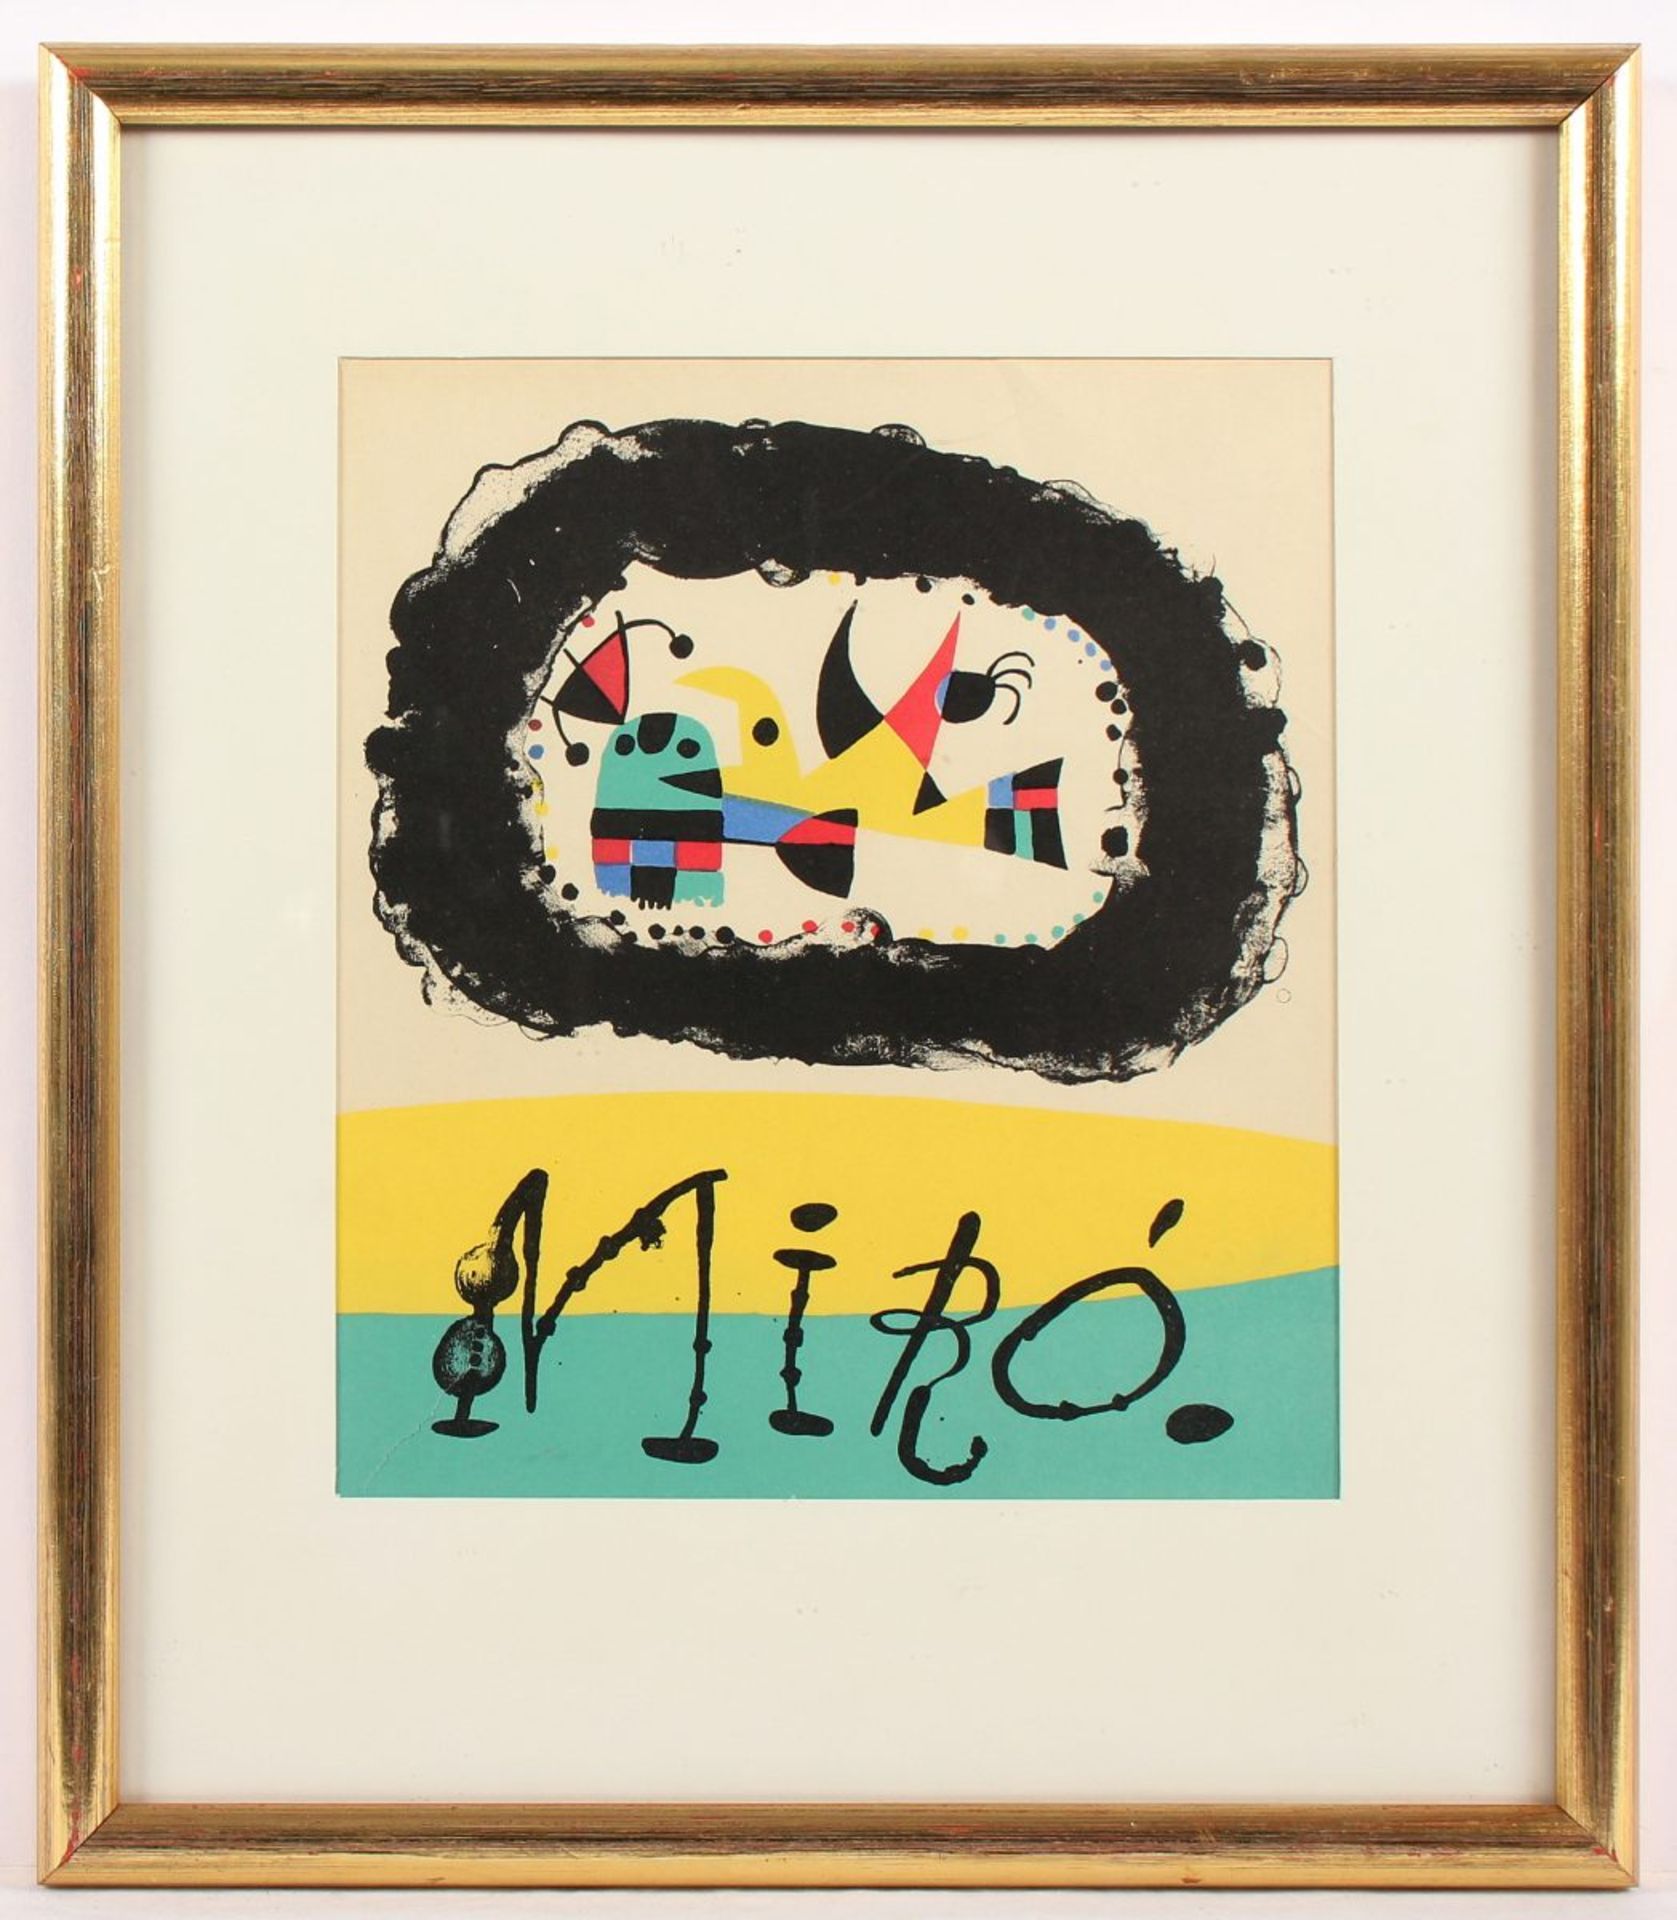 MIRO, Joan, "Composition", Original-Farblithografie, ca. 24 x 20, aus "Lithograph", R.